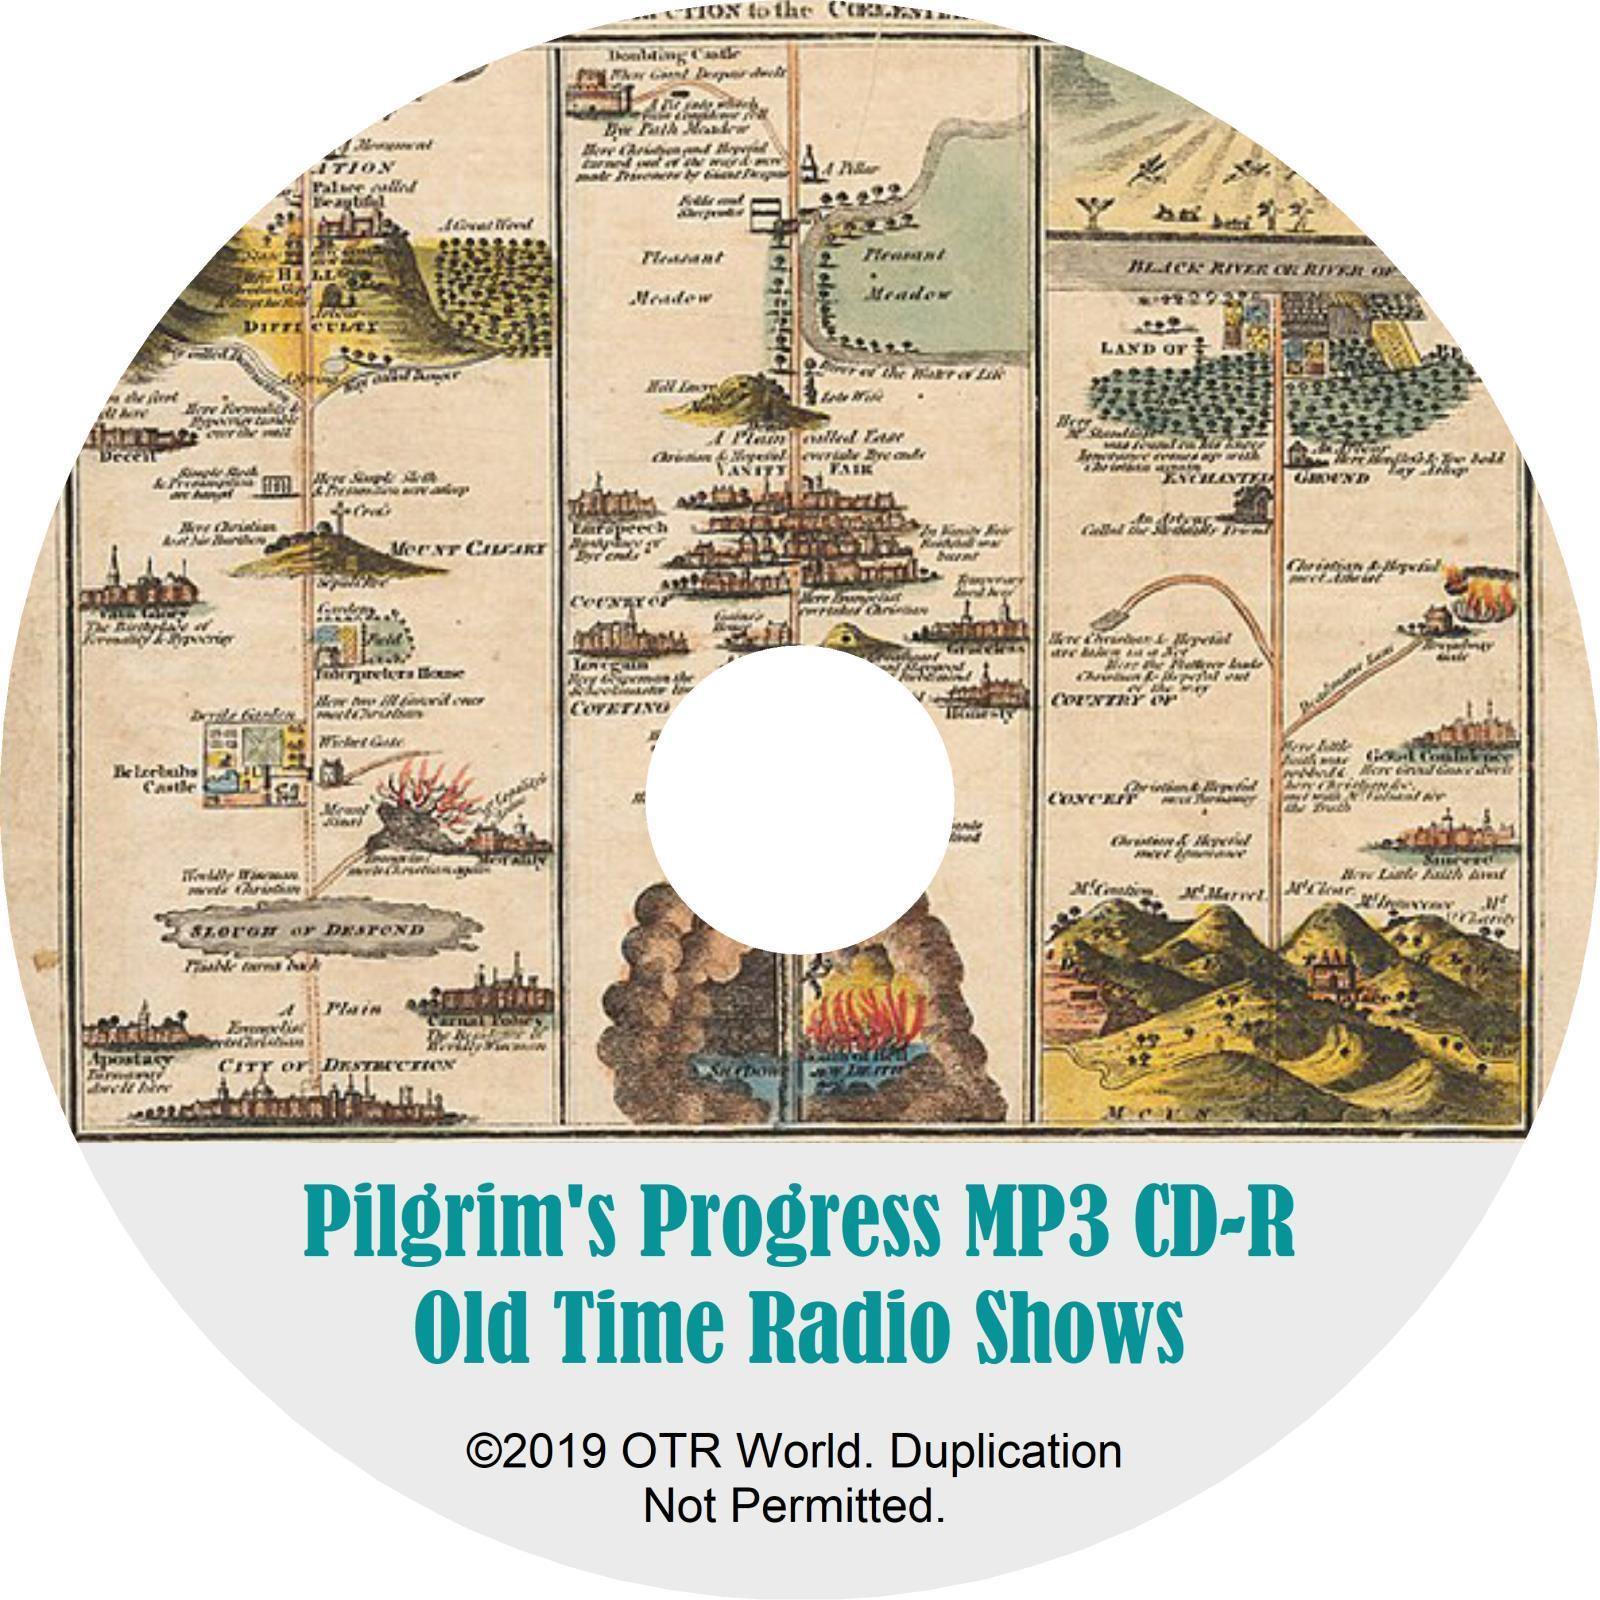 Pilgrim's Progress OTR Old Time Radio Shows MP3 On CD 3 Episodes - OTR World